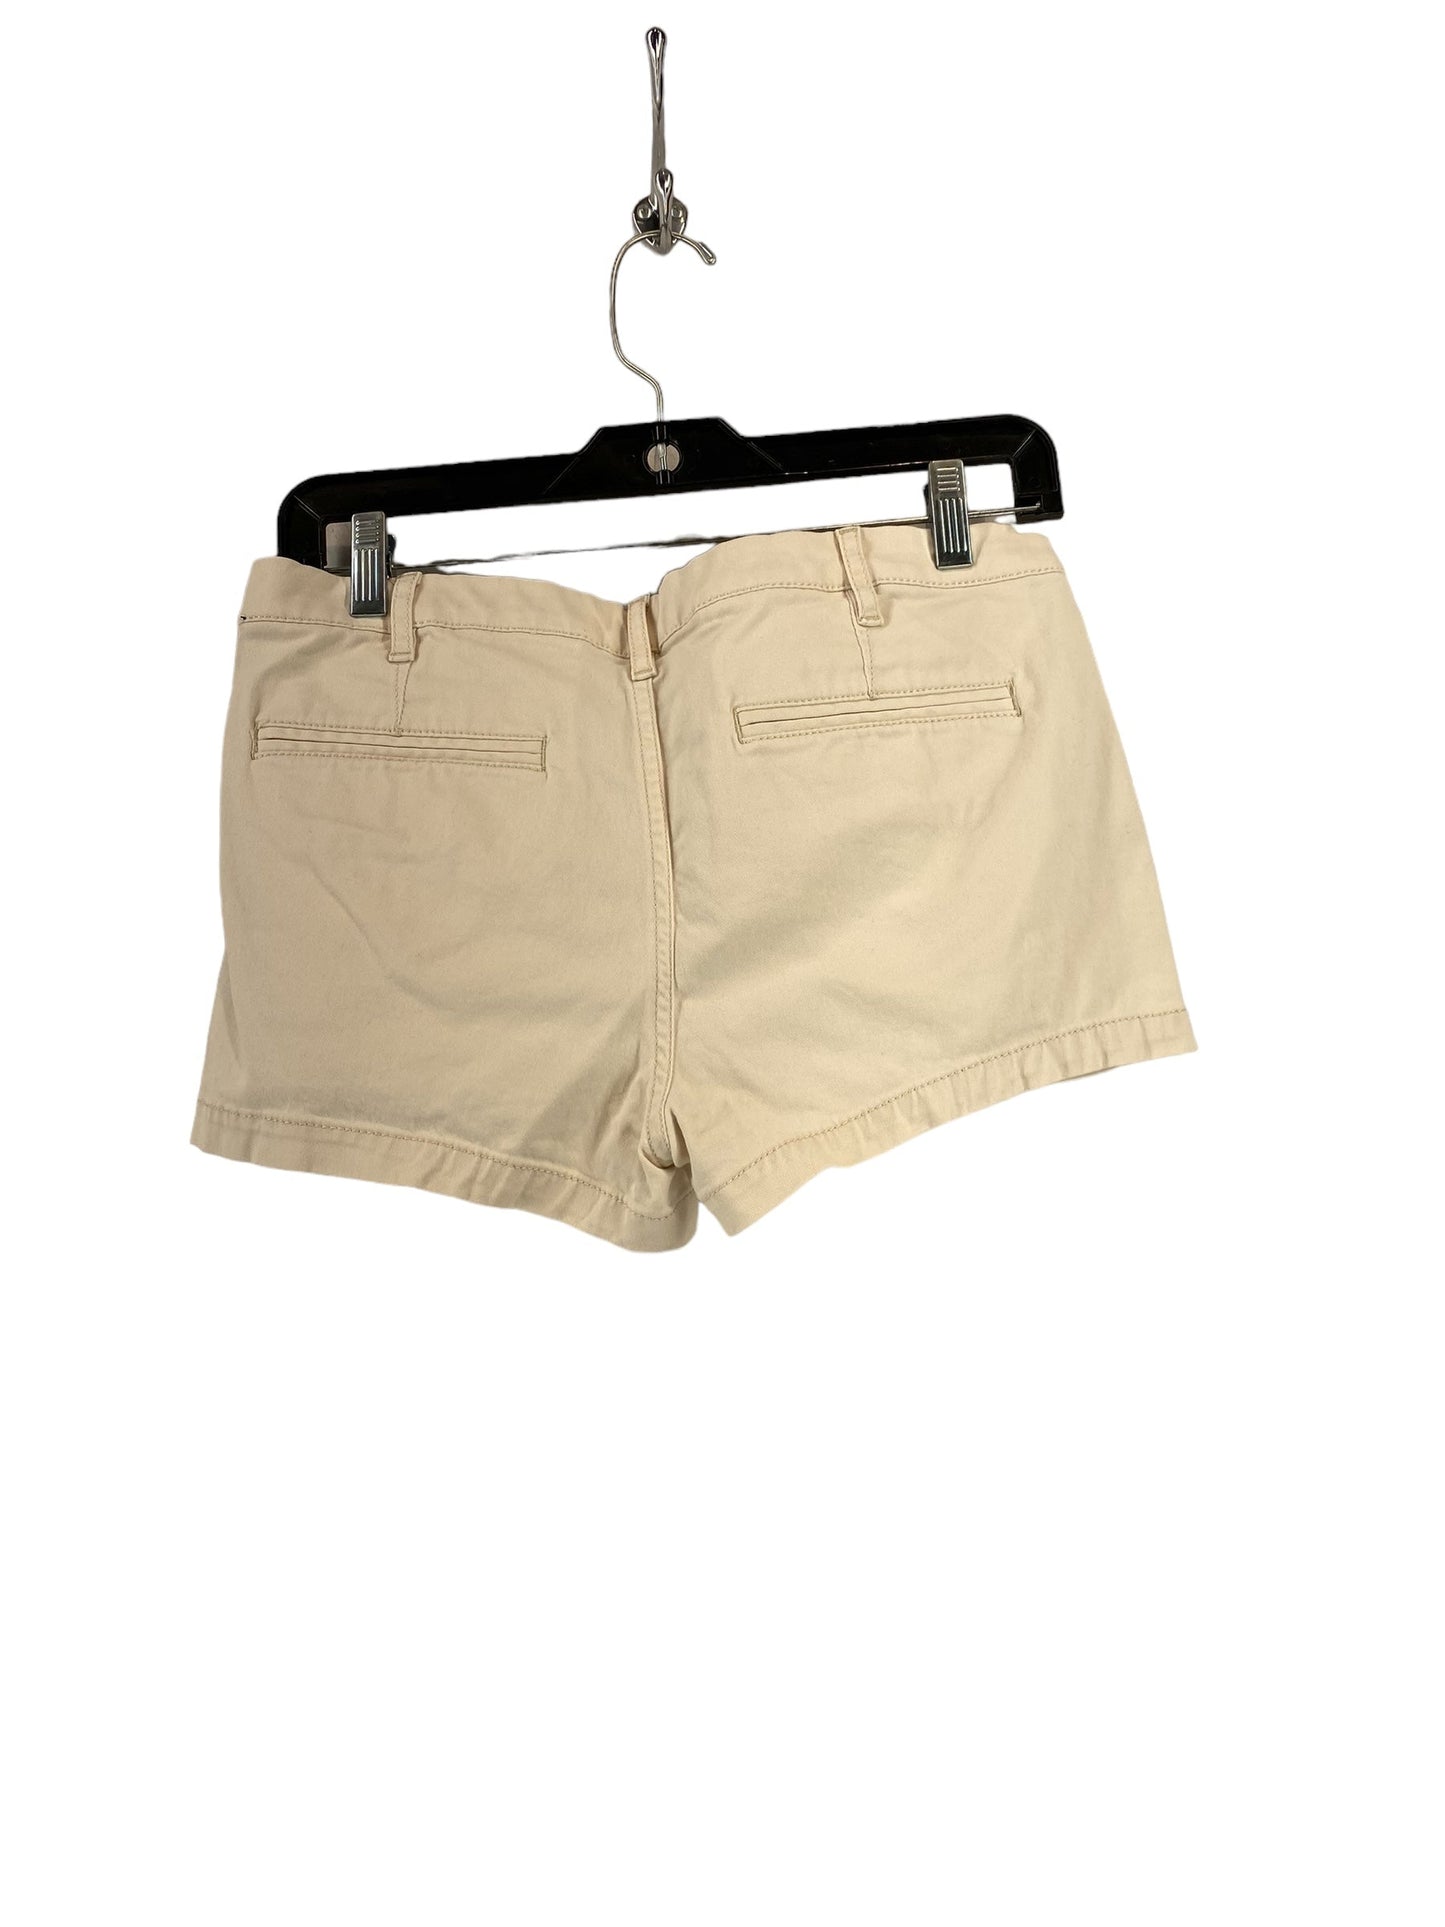 Tan Shorts Express, Size 4